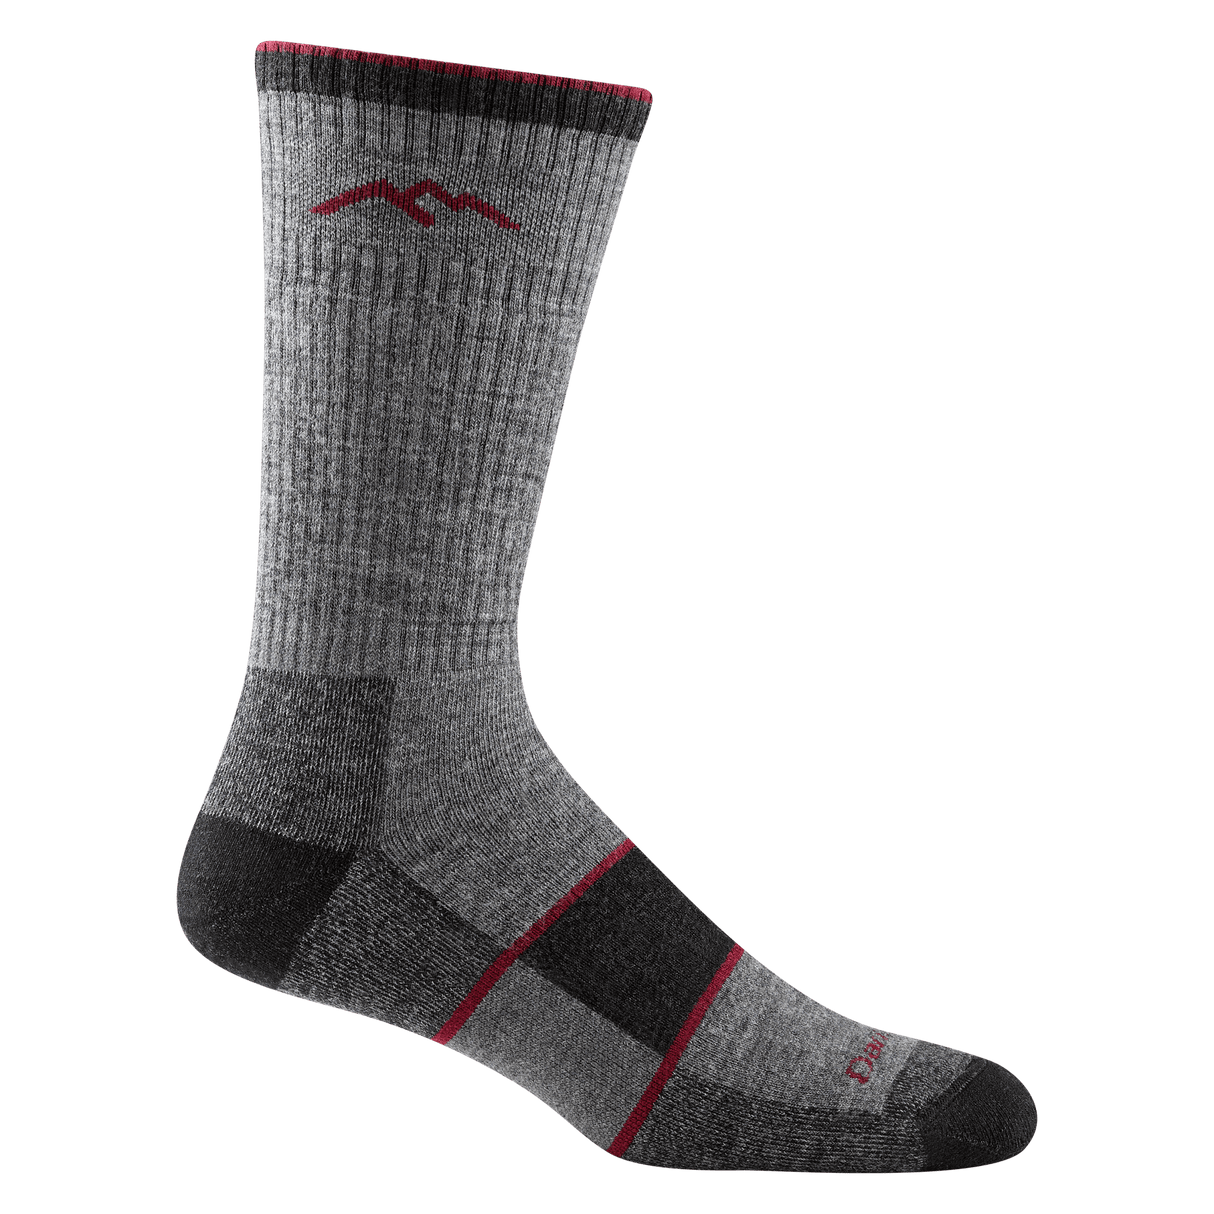 Darn Tough Mens Hiker Boot Full Cushion Midweight Socks  -  Medium / Charcoal